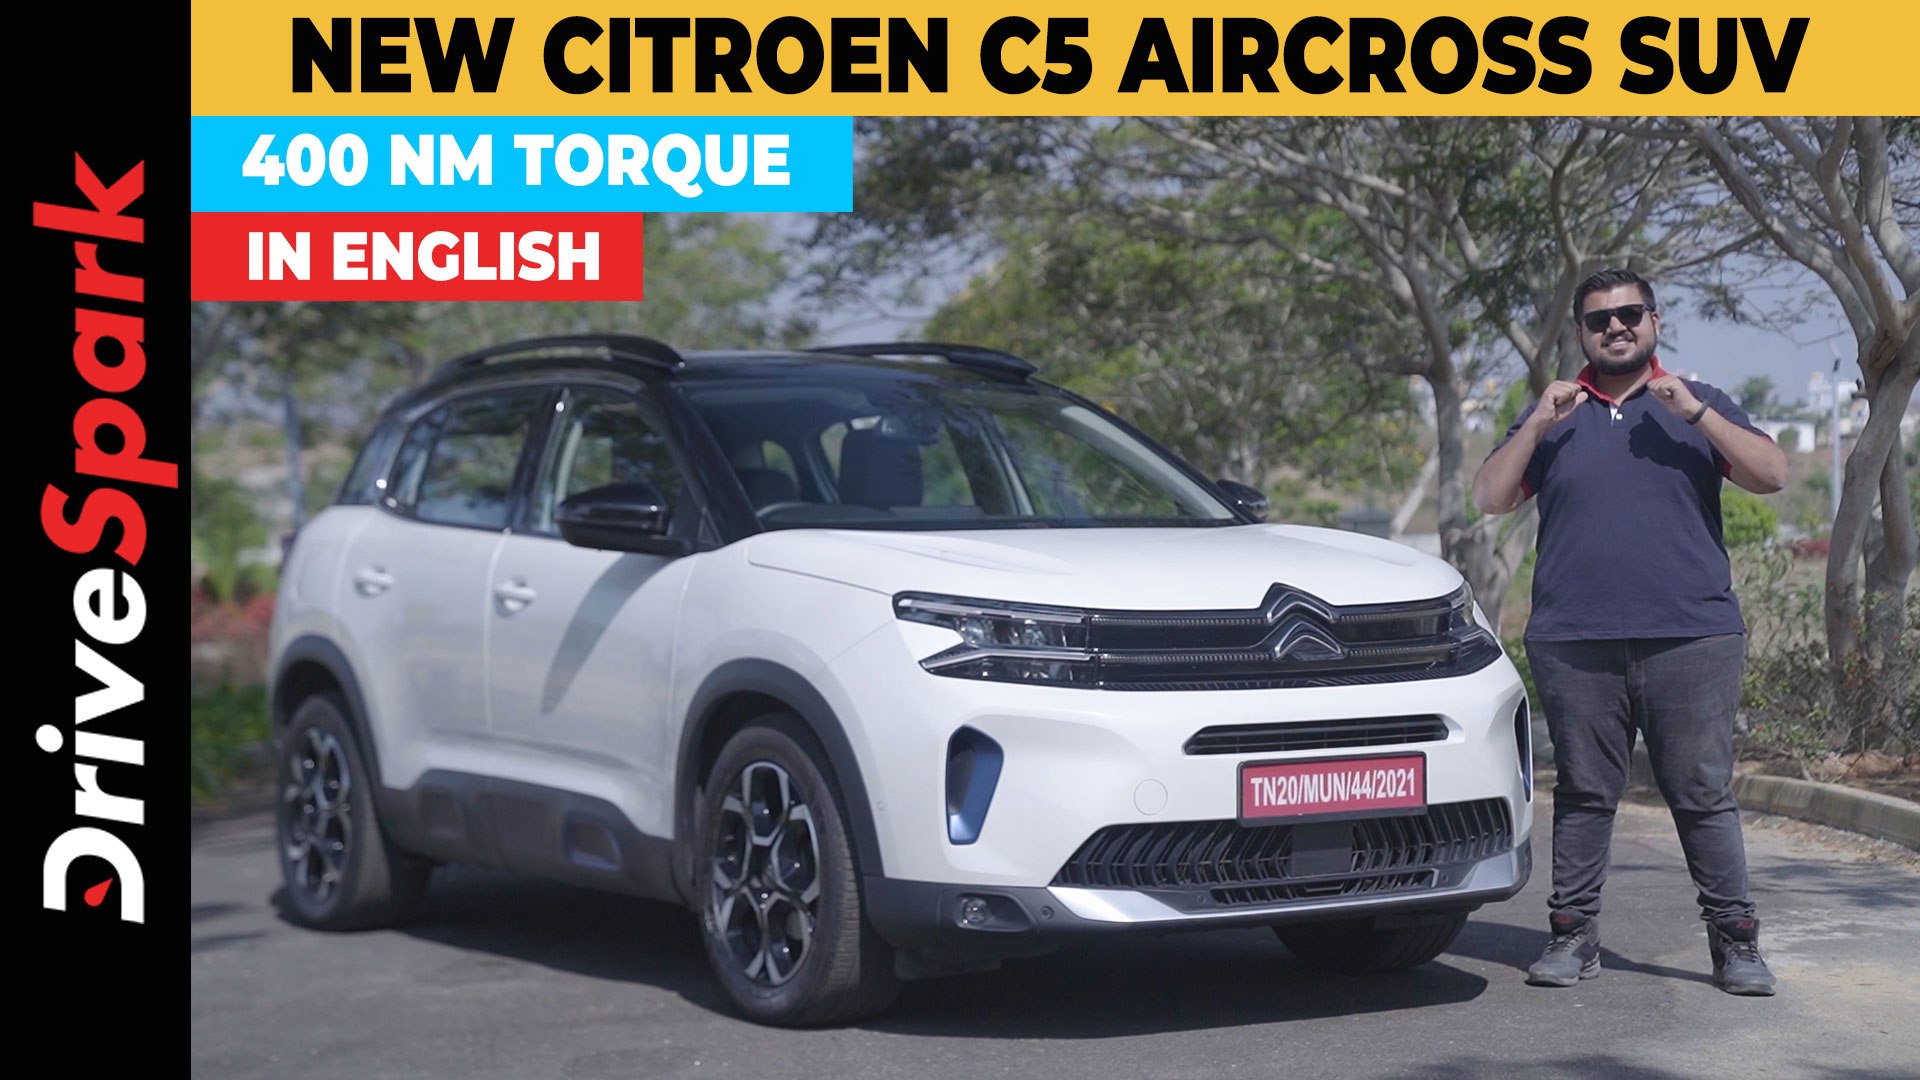 Review: Citroën C5 Aircross